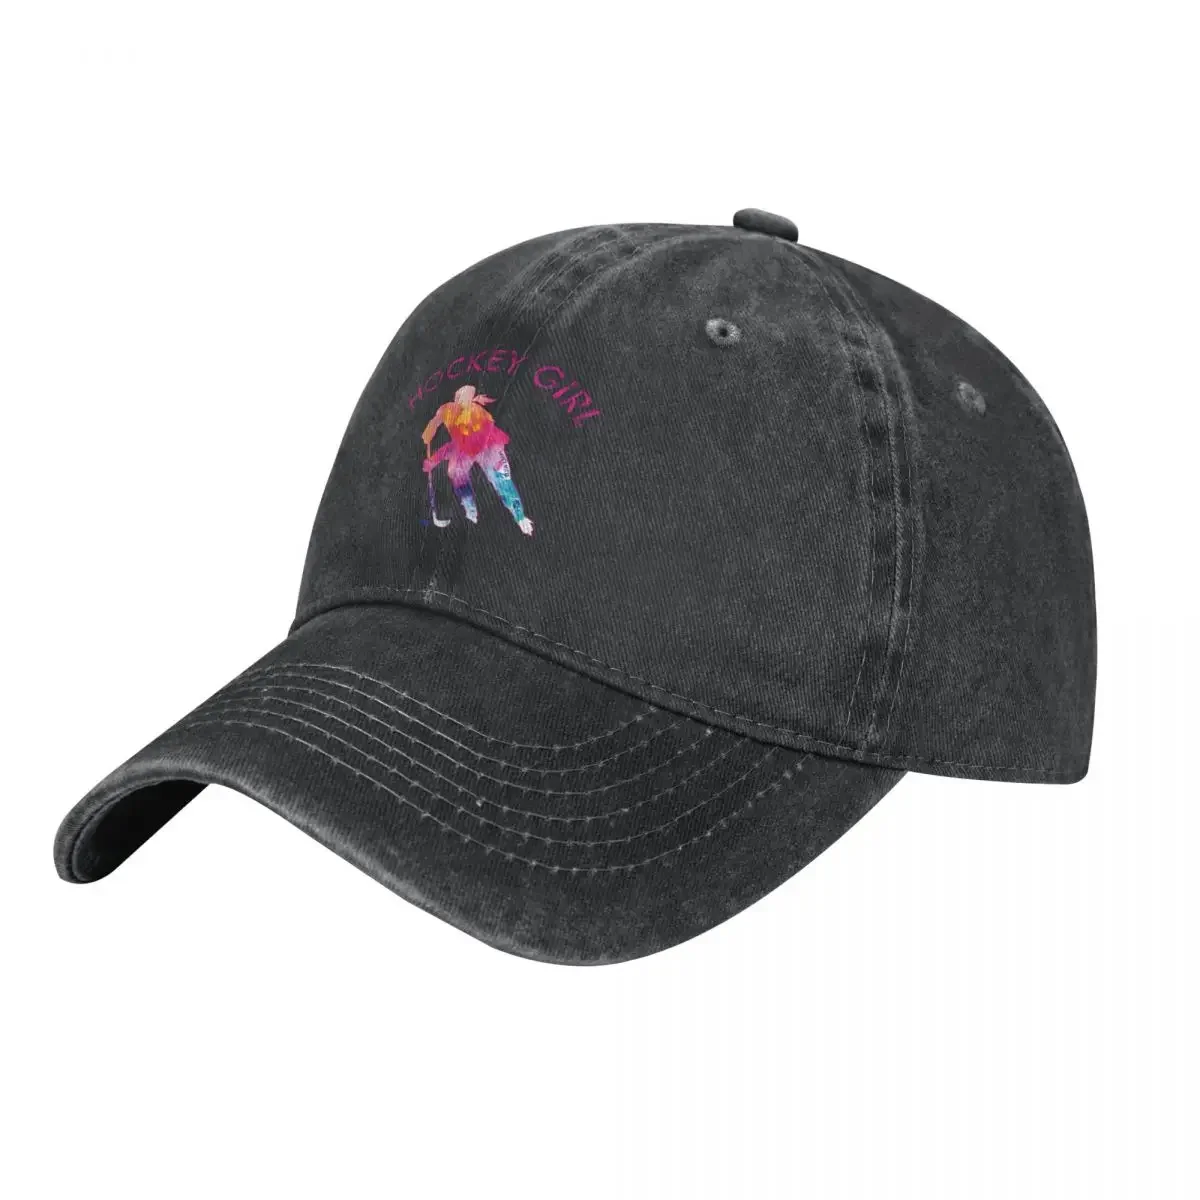 

Hockey Girl Watercolor Cowboy Hat Fishing cap Golf Hat Man derby hat Designer Woman Hats Men's